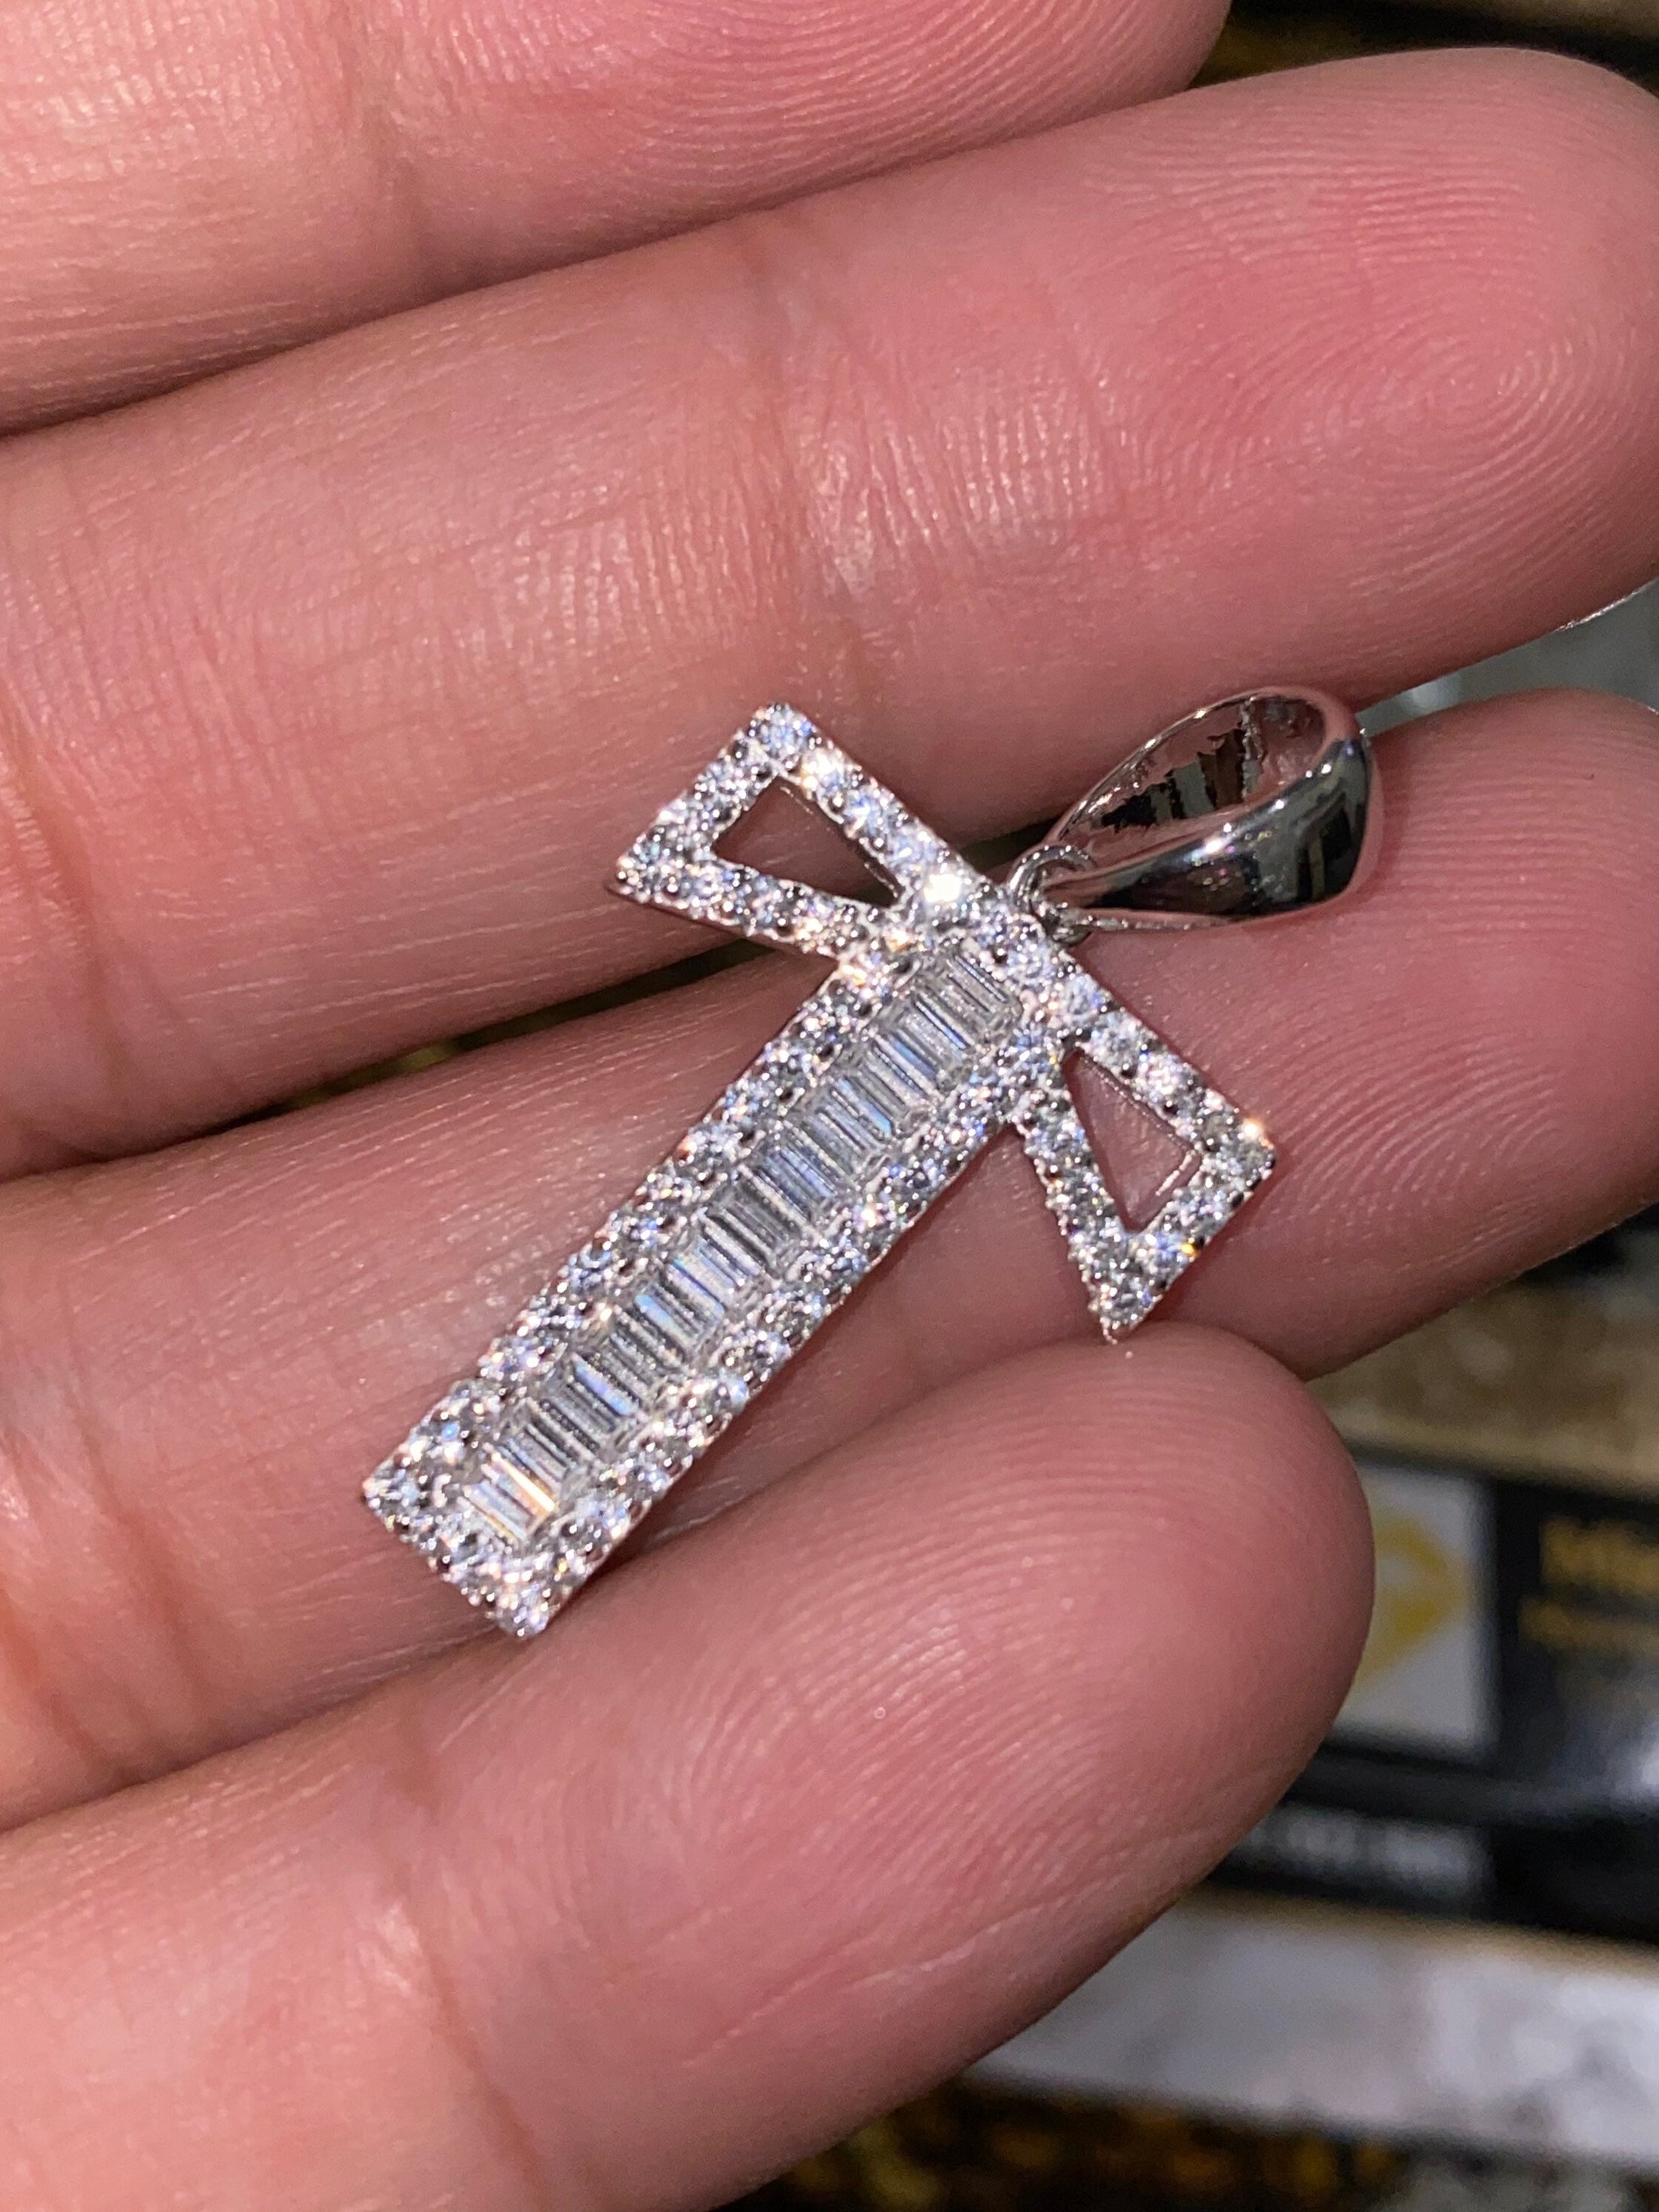 T initial | 10k Gold Vermeil | Swarovski Crystal pendant | Monogram Name Necklace | VVS clarity | For Her | For Him | Christmas Gift